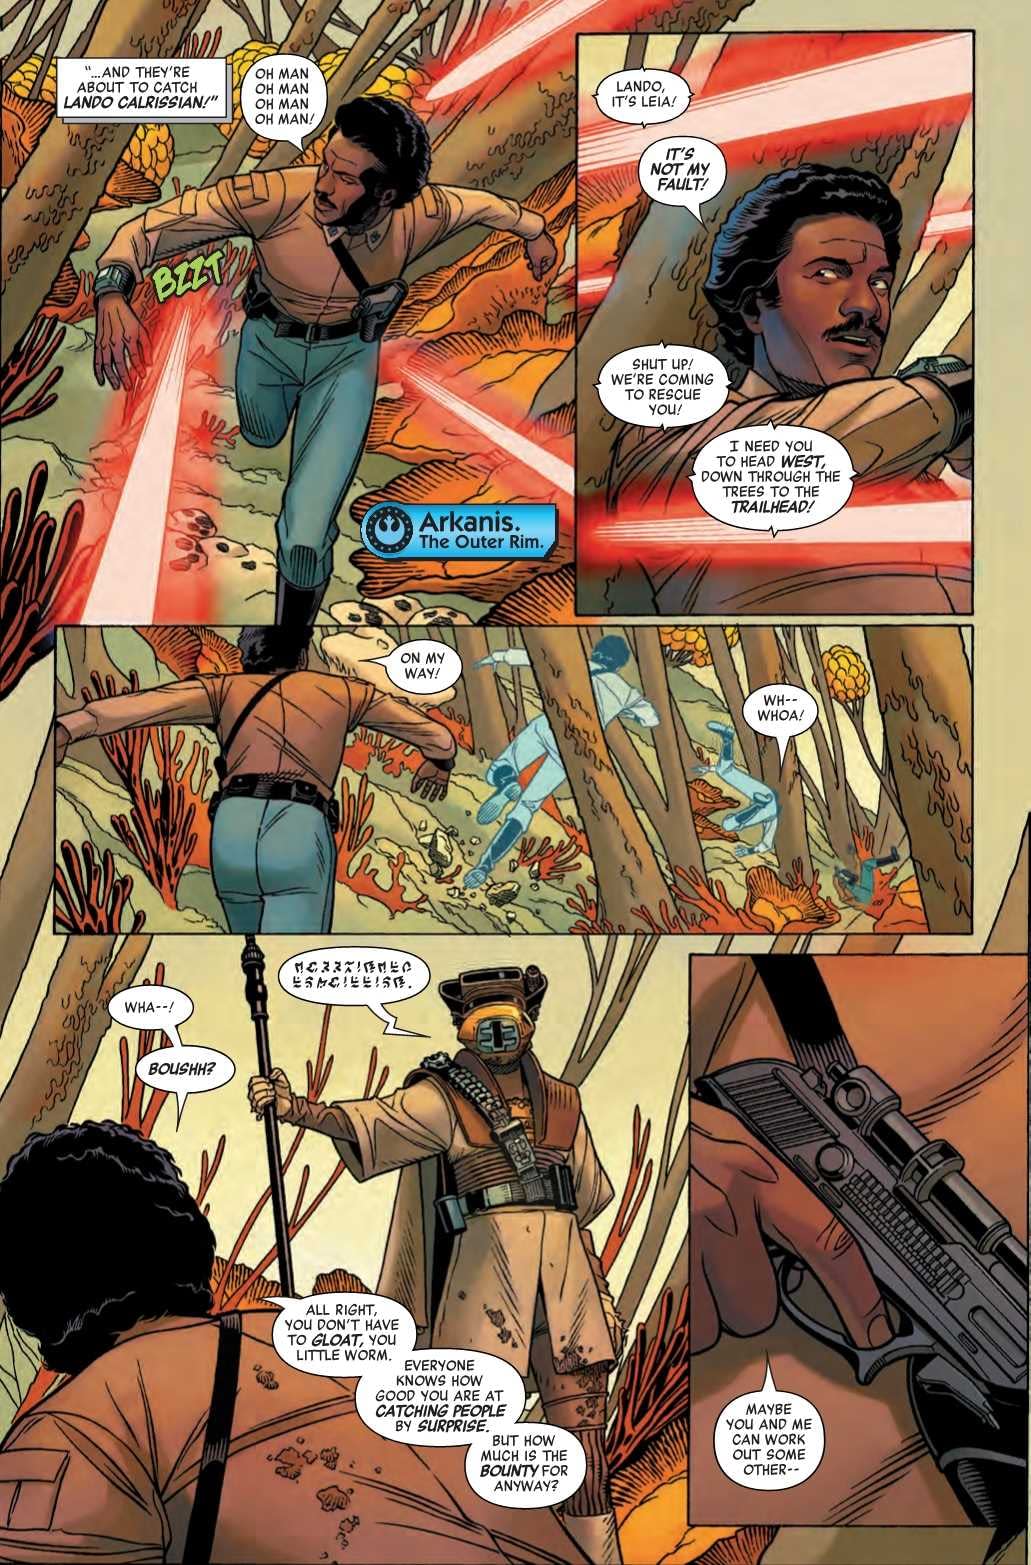 Chebacca's Secret Fetish Revealed in Star Wars AOR Princess Leia #1